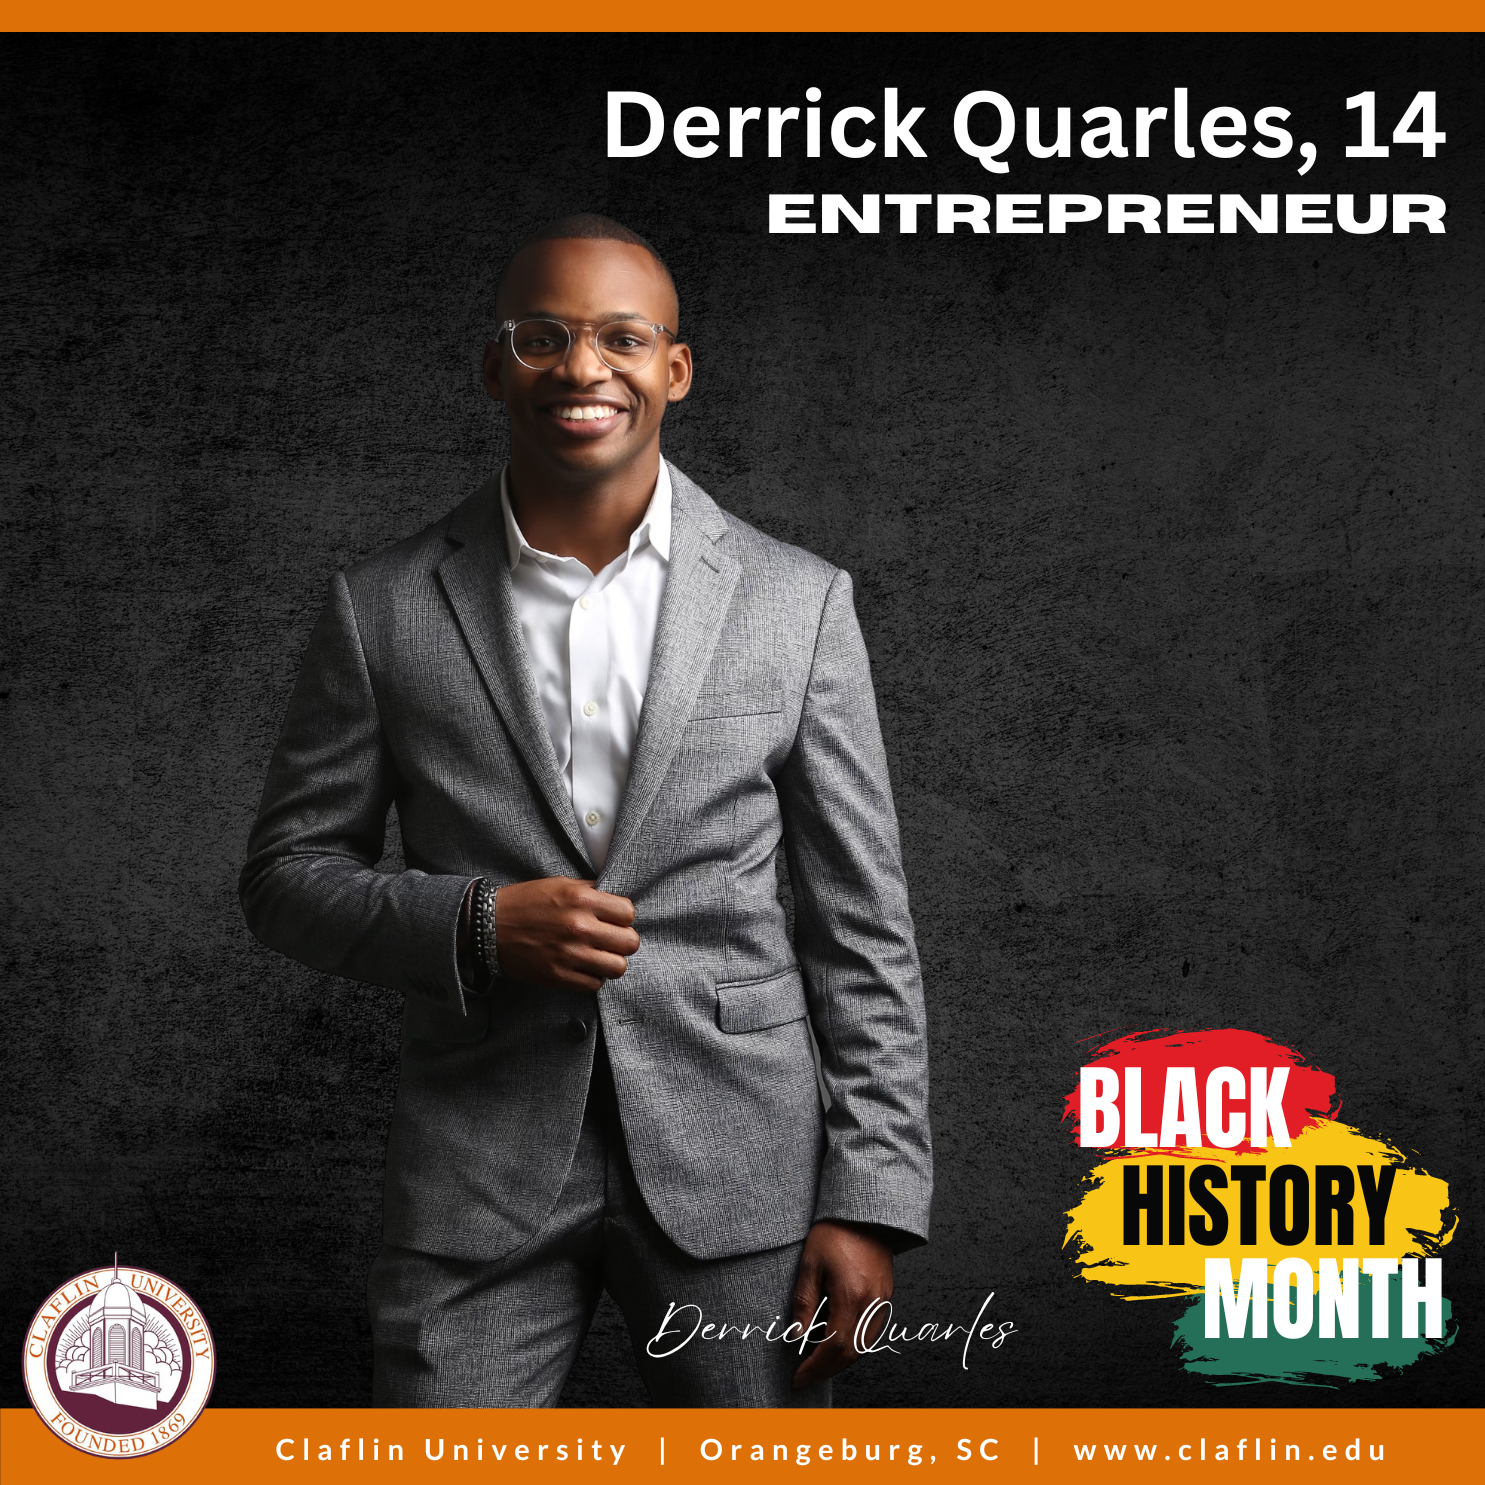 derrick_quarles_black_history_month_claflin_university_alumni